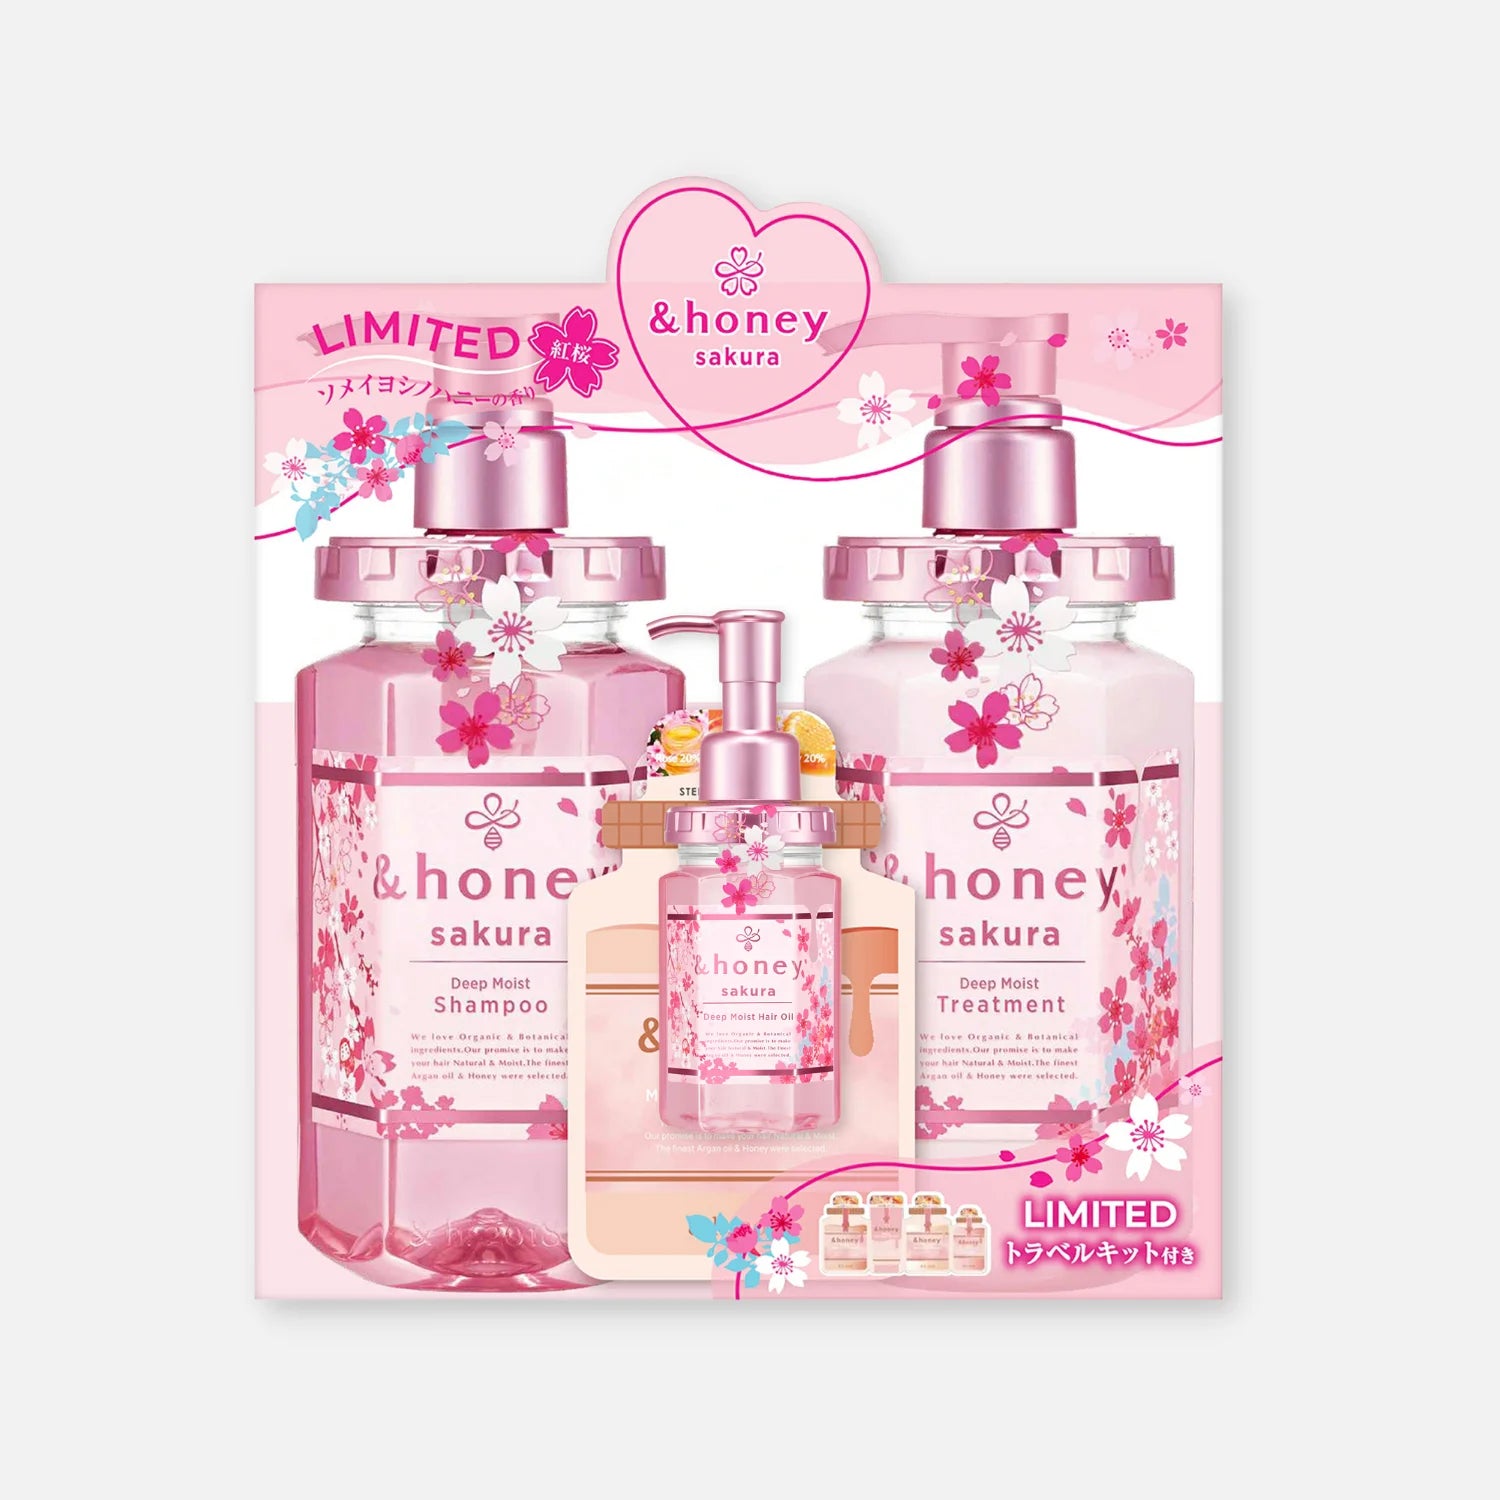 & Honey Sakura Limited Edition Shampoo, Treatment & Hair Oil Set 440ml Each  + 100ml